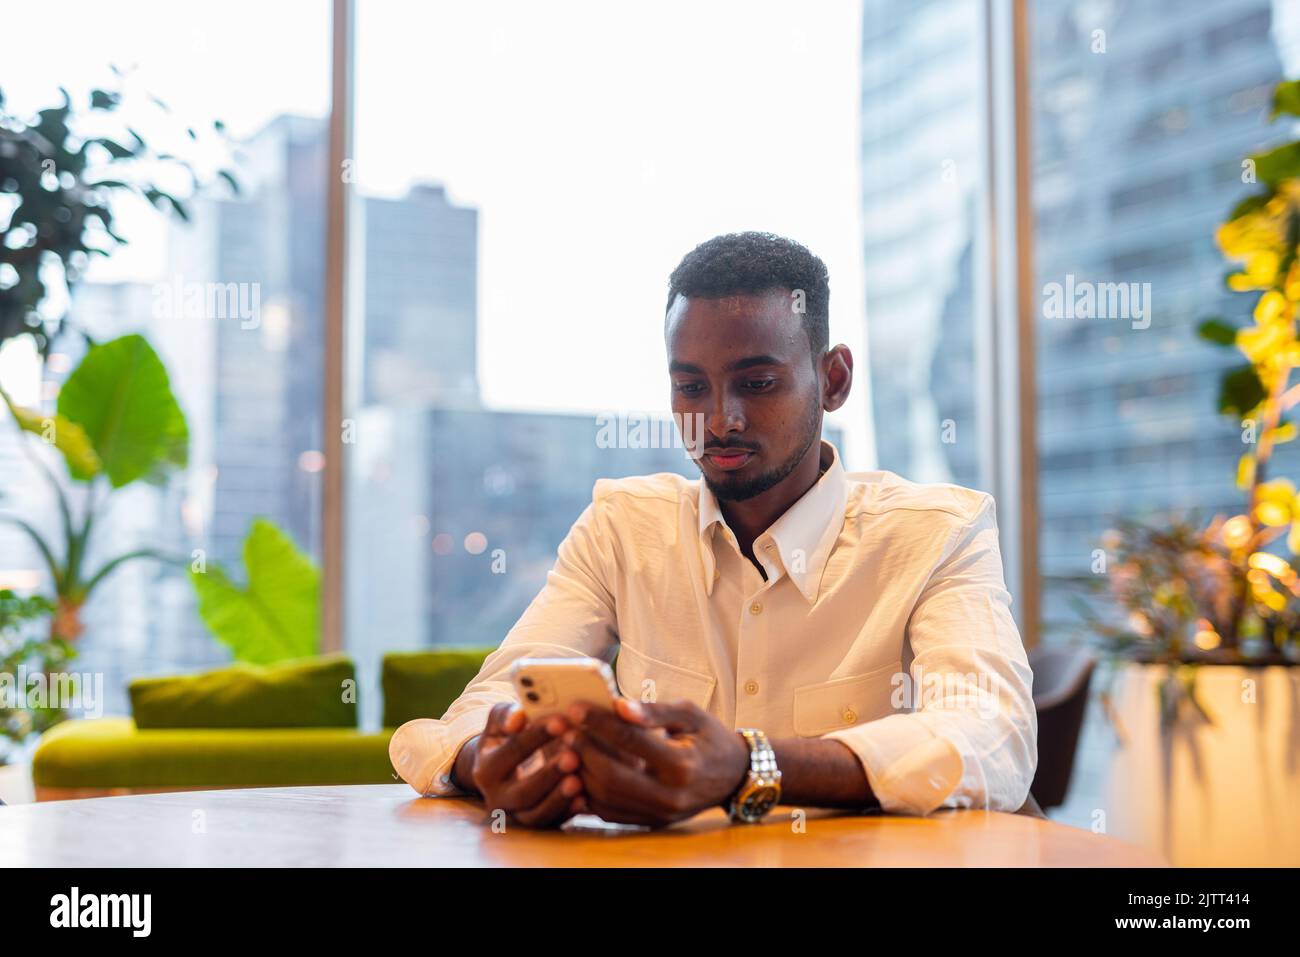 Portrait of young handsome stylish black man enjoying city life Stock Photo